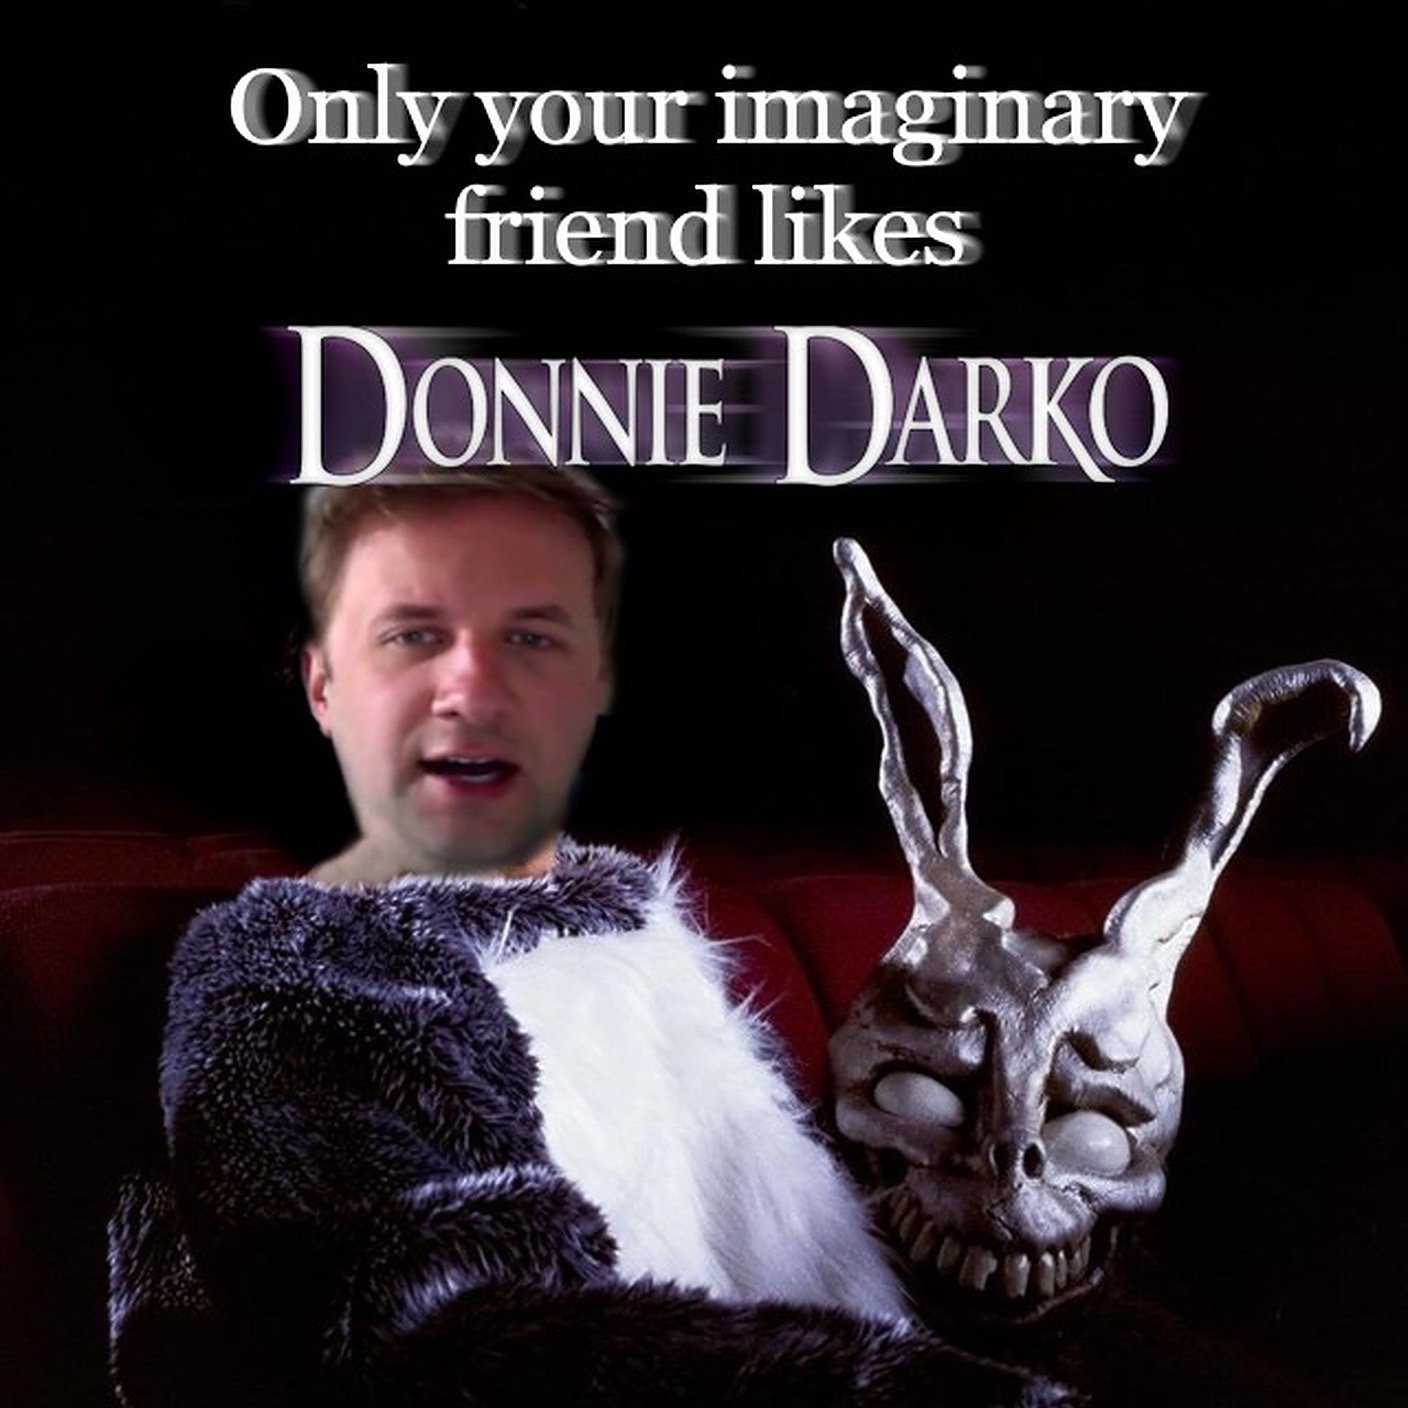 Why Donnie Darko donnie SUCKOS according to Phil Ranta episode 212 GTSC podcast